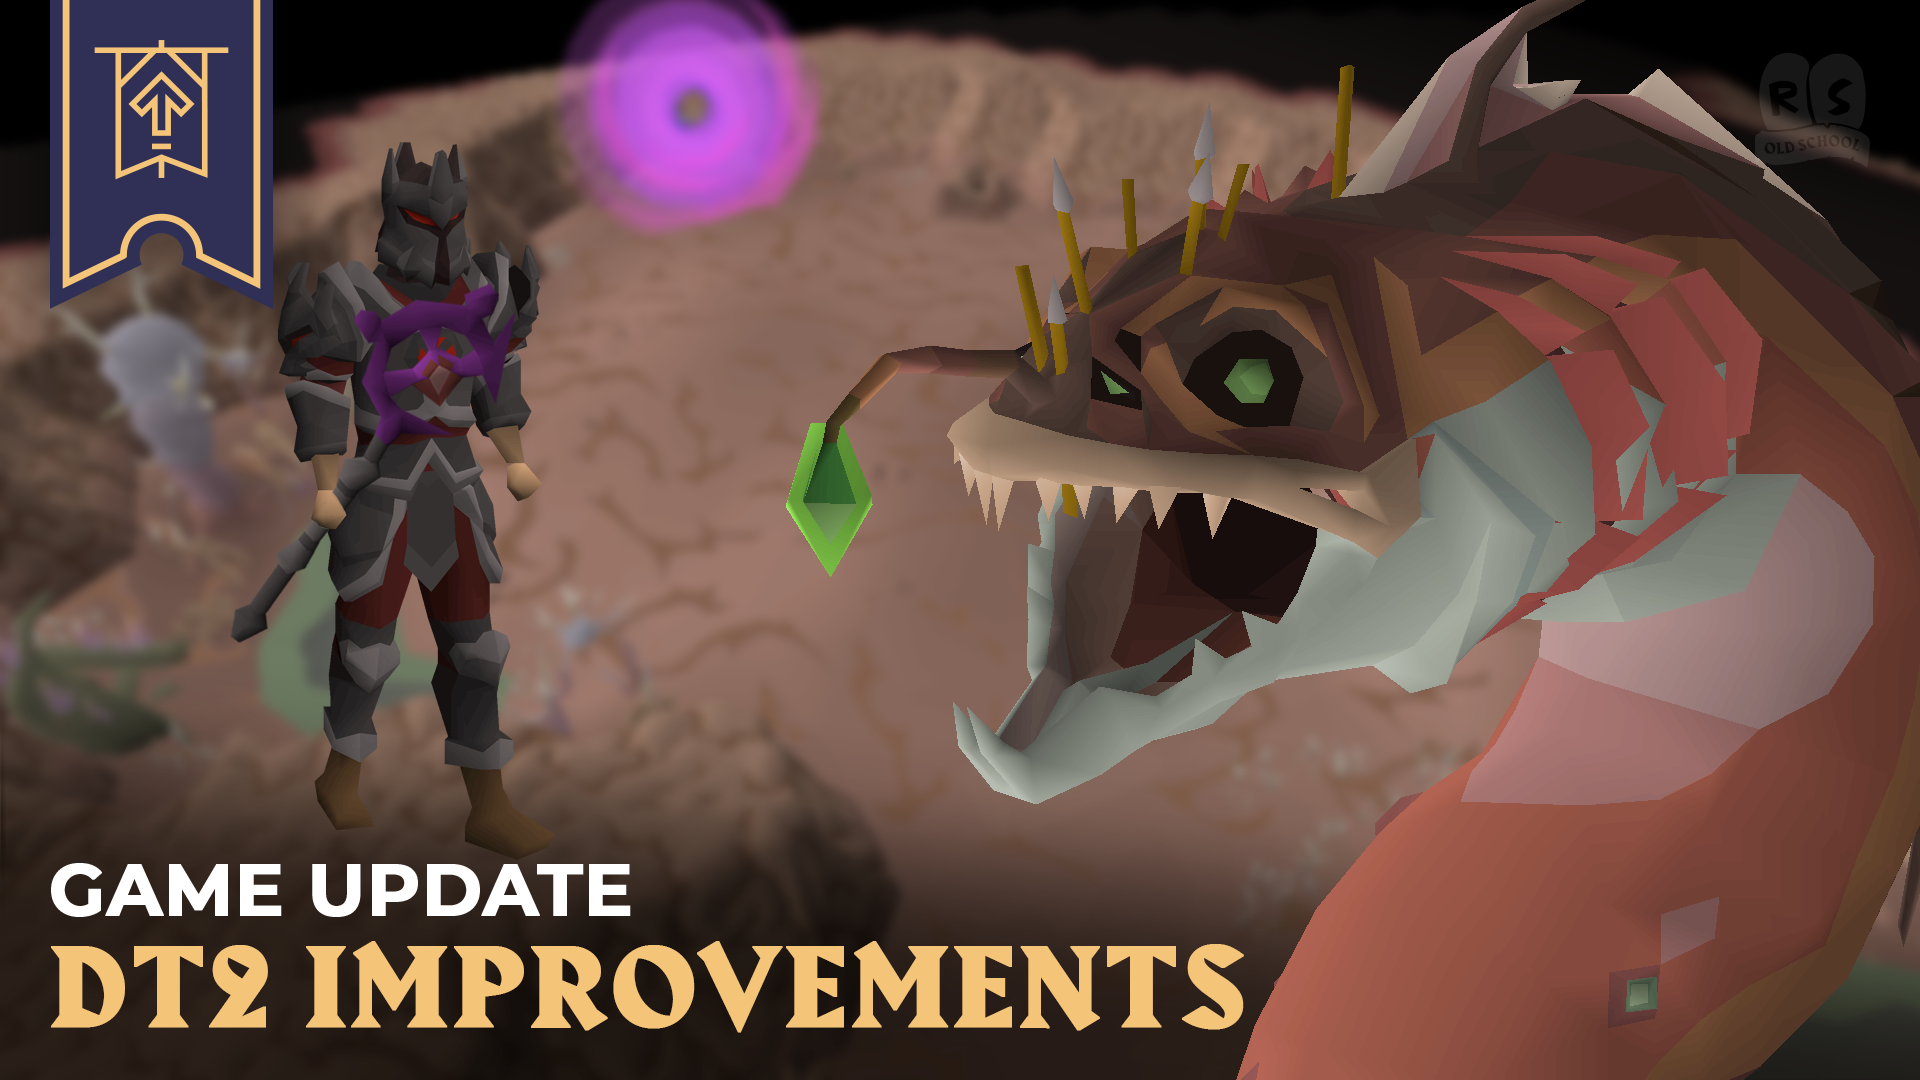 RuneScape Update Adds New Slayer Challenge